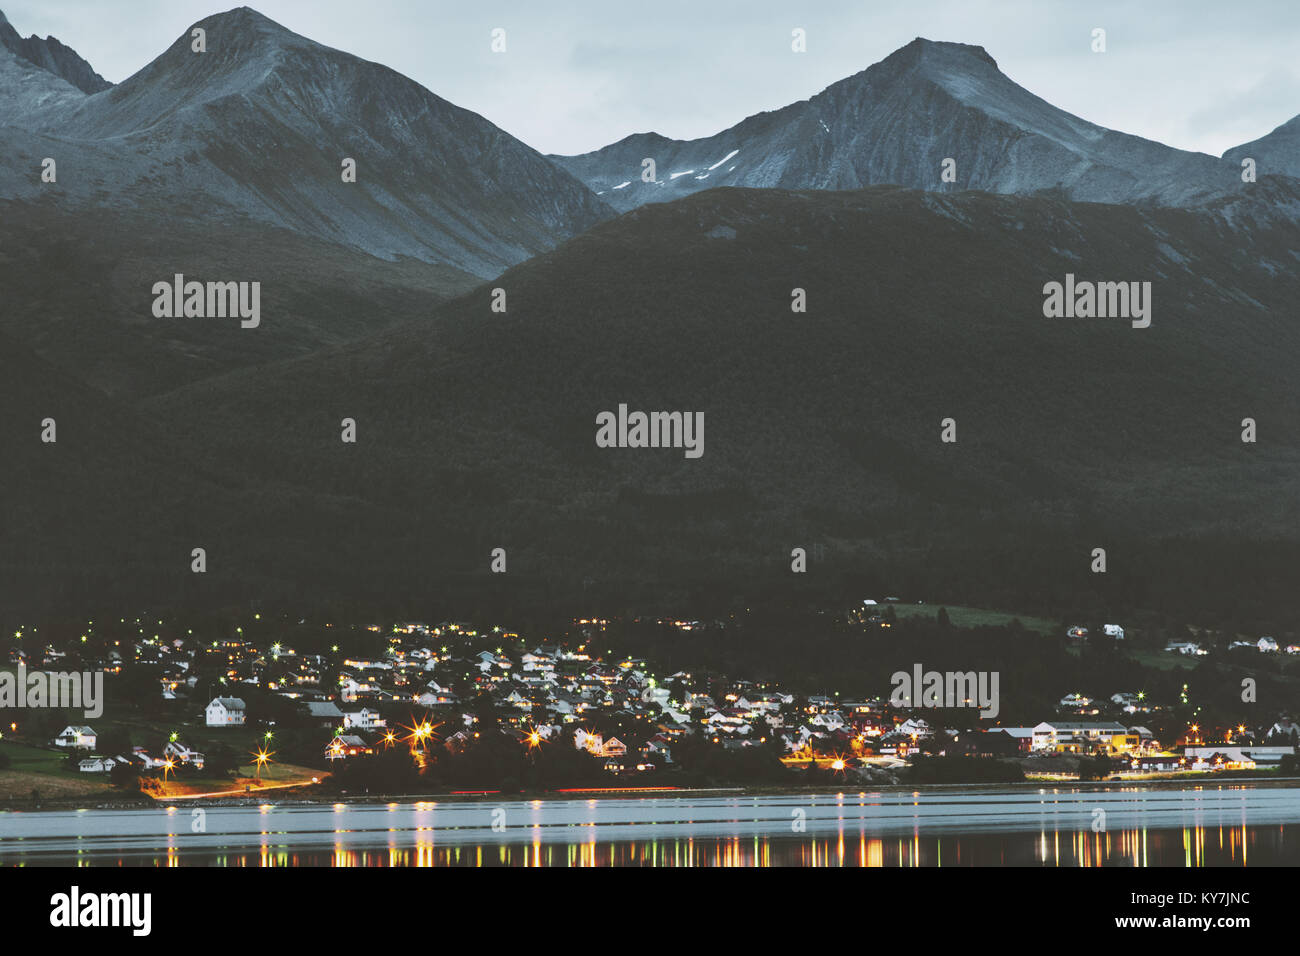 Nacht in den Bergen über dem Dorf Landschaft in Norwegen reisen Landschaft der skandinavischen Natur Stockfoto